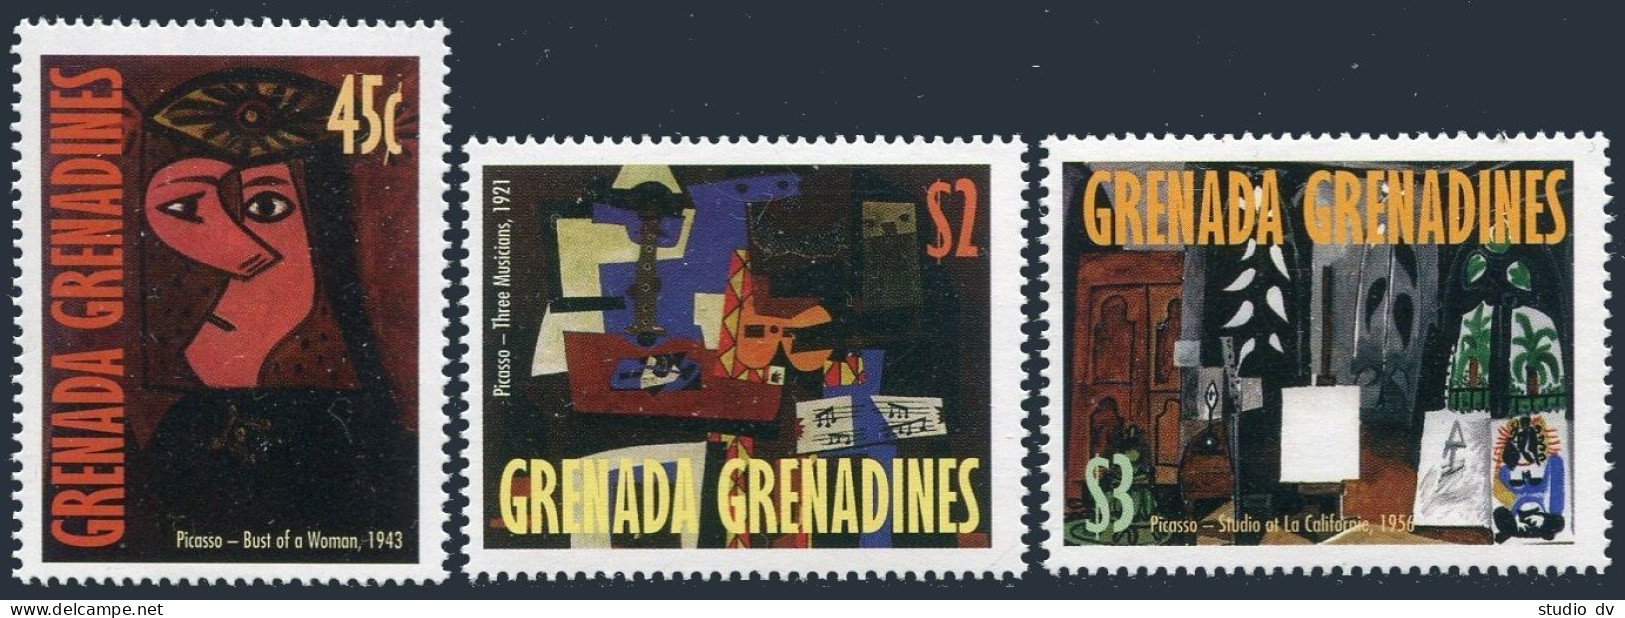 Grenada Grendines 2048-2050, 2051 Sheet, MNH. Pablo Picasso Paintings, 1998. - Grenade (1974-...)